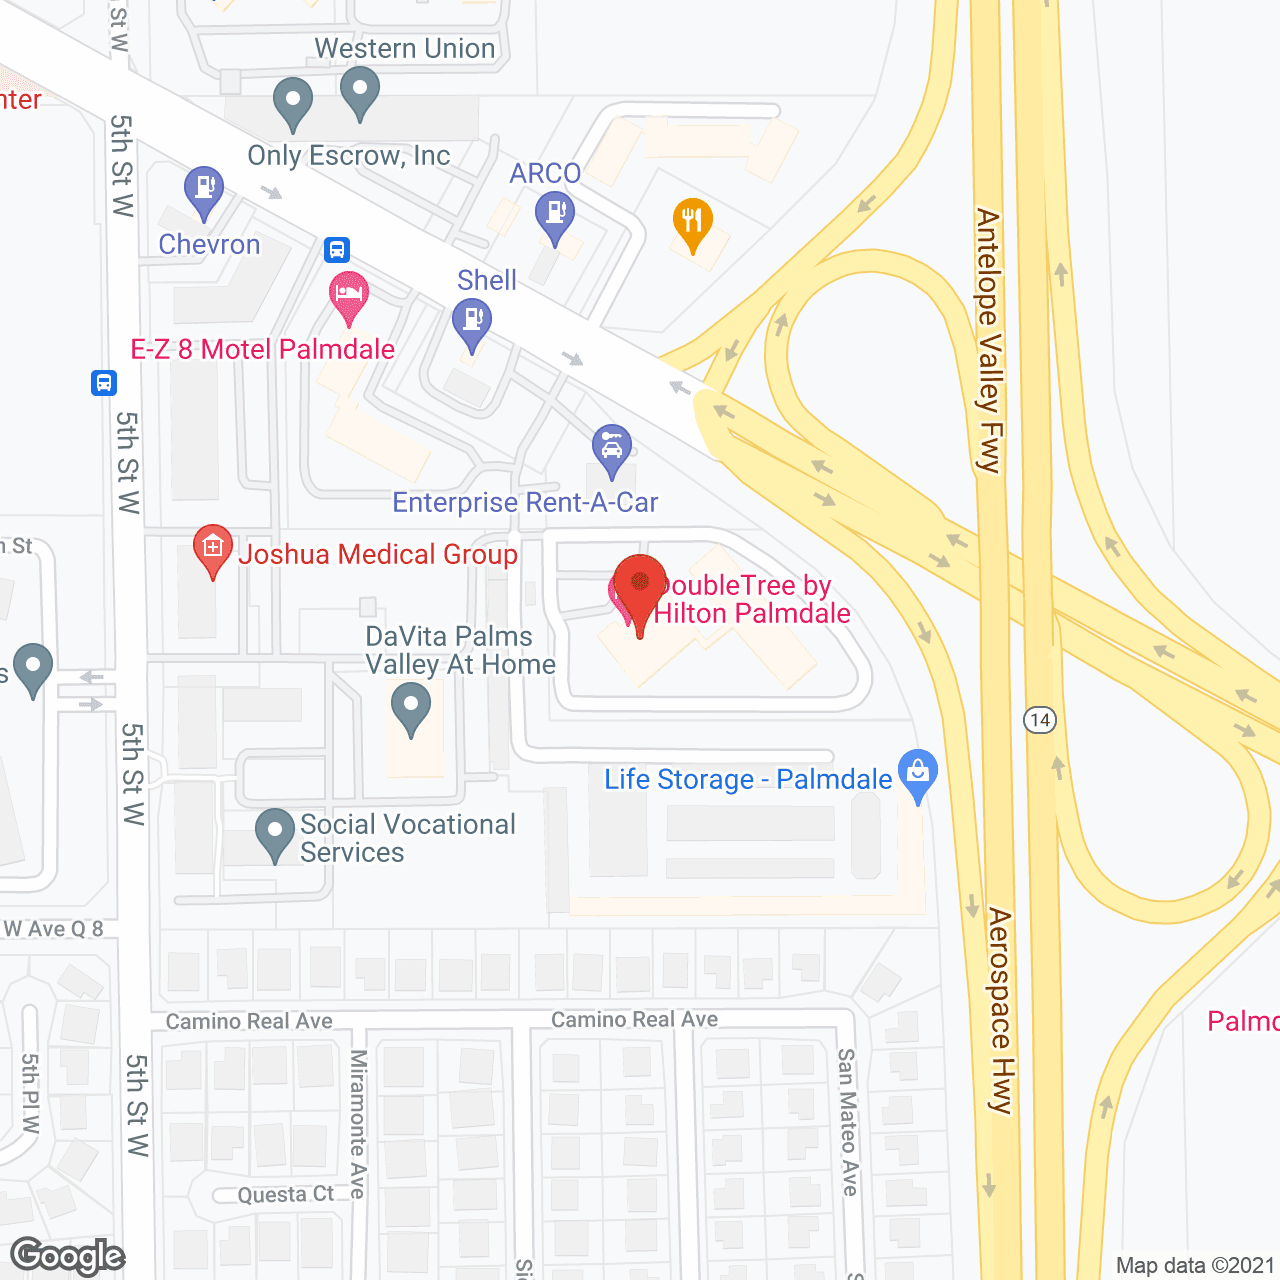 DoubleTree by Hilton Palmdale in google map